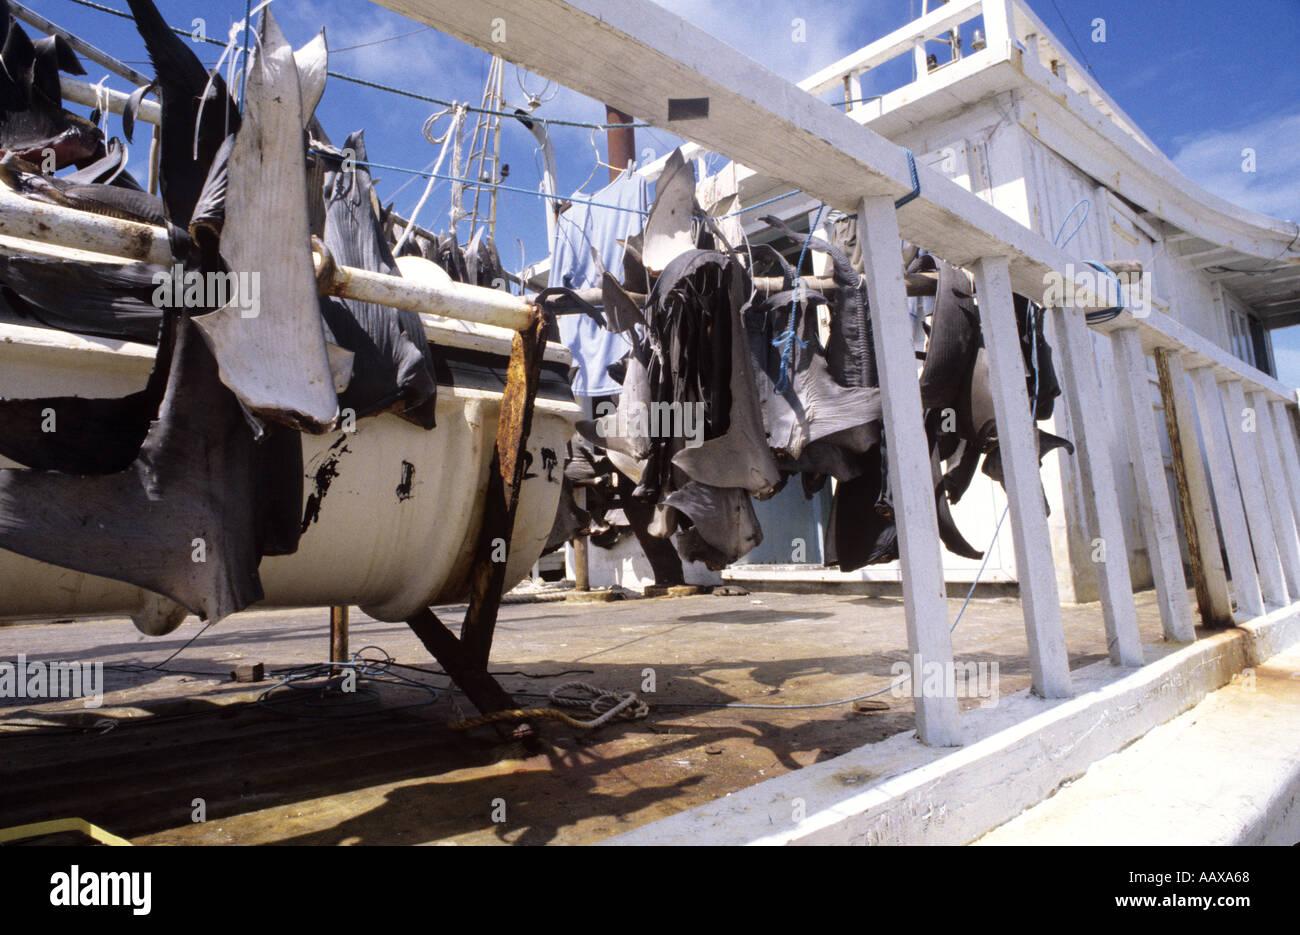 sharkfins drying on fishing vessel Stock Photo